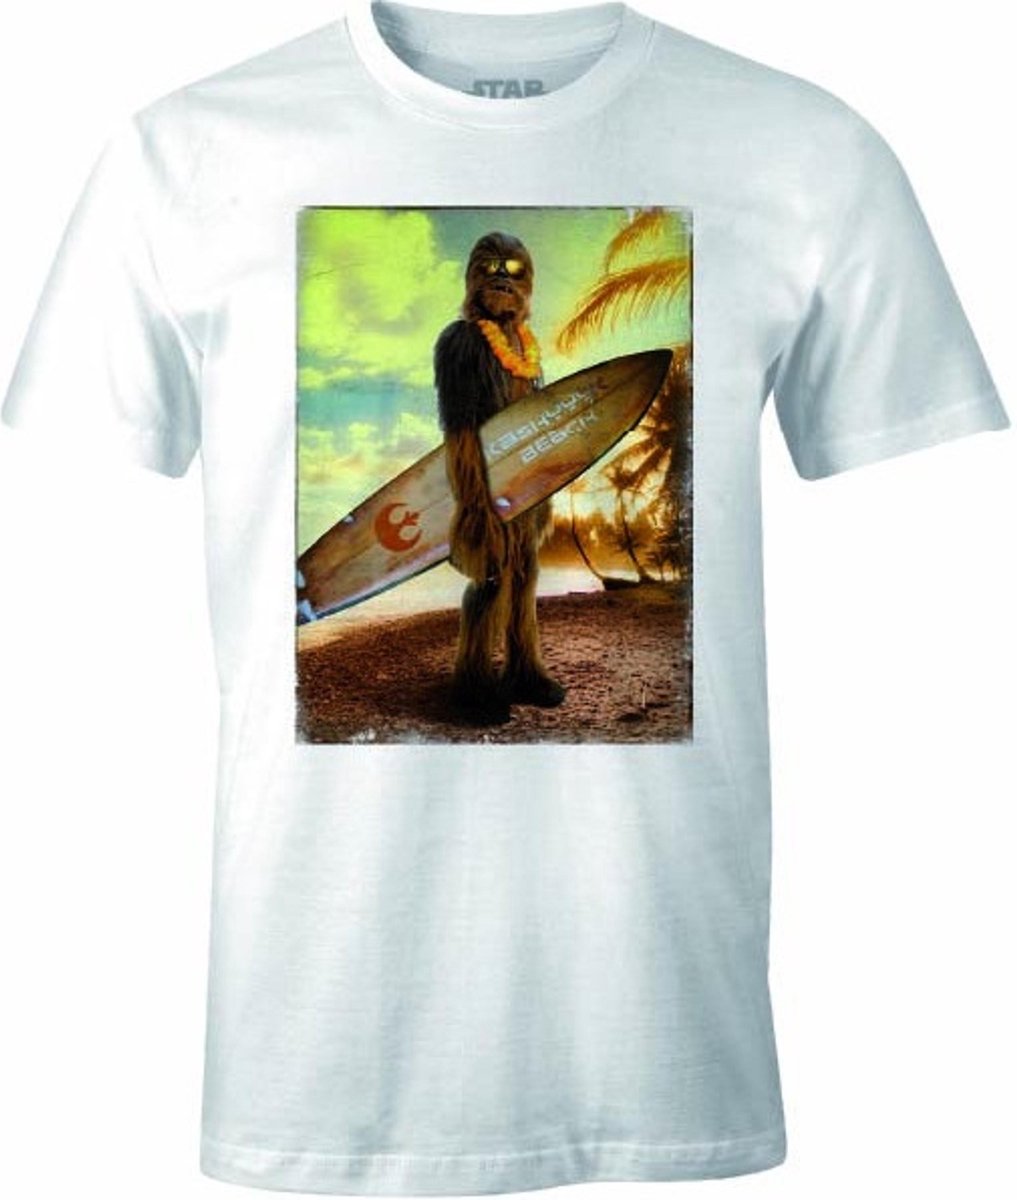 Star Wars - Chewie on the Beach T-shirt